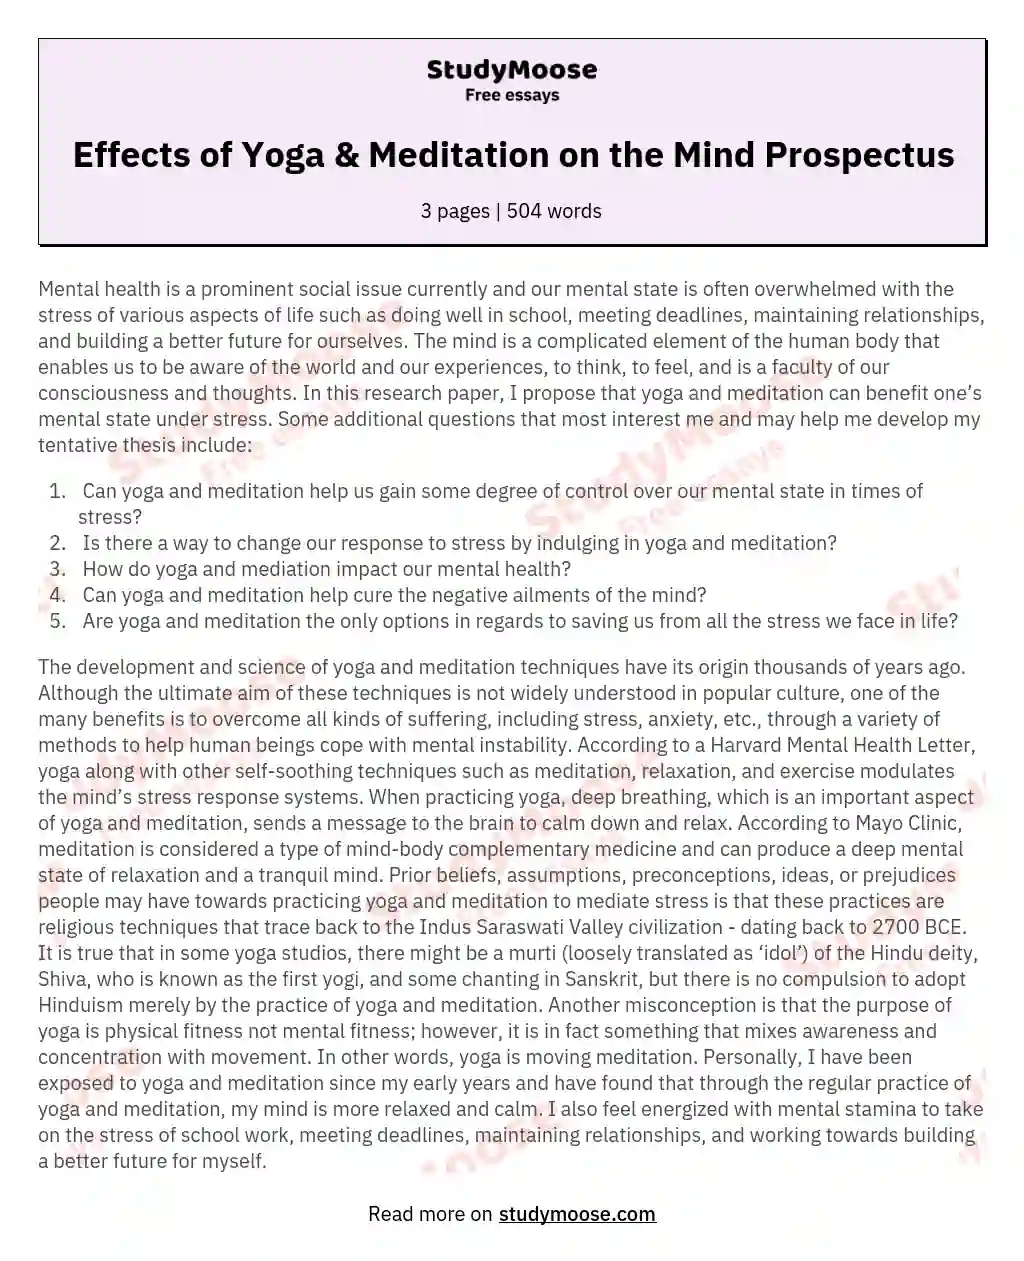 Effects of Yoga & Meditation on the Mind Prospectus essay